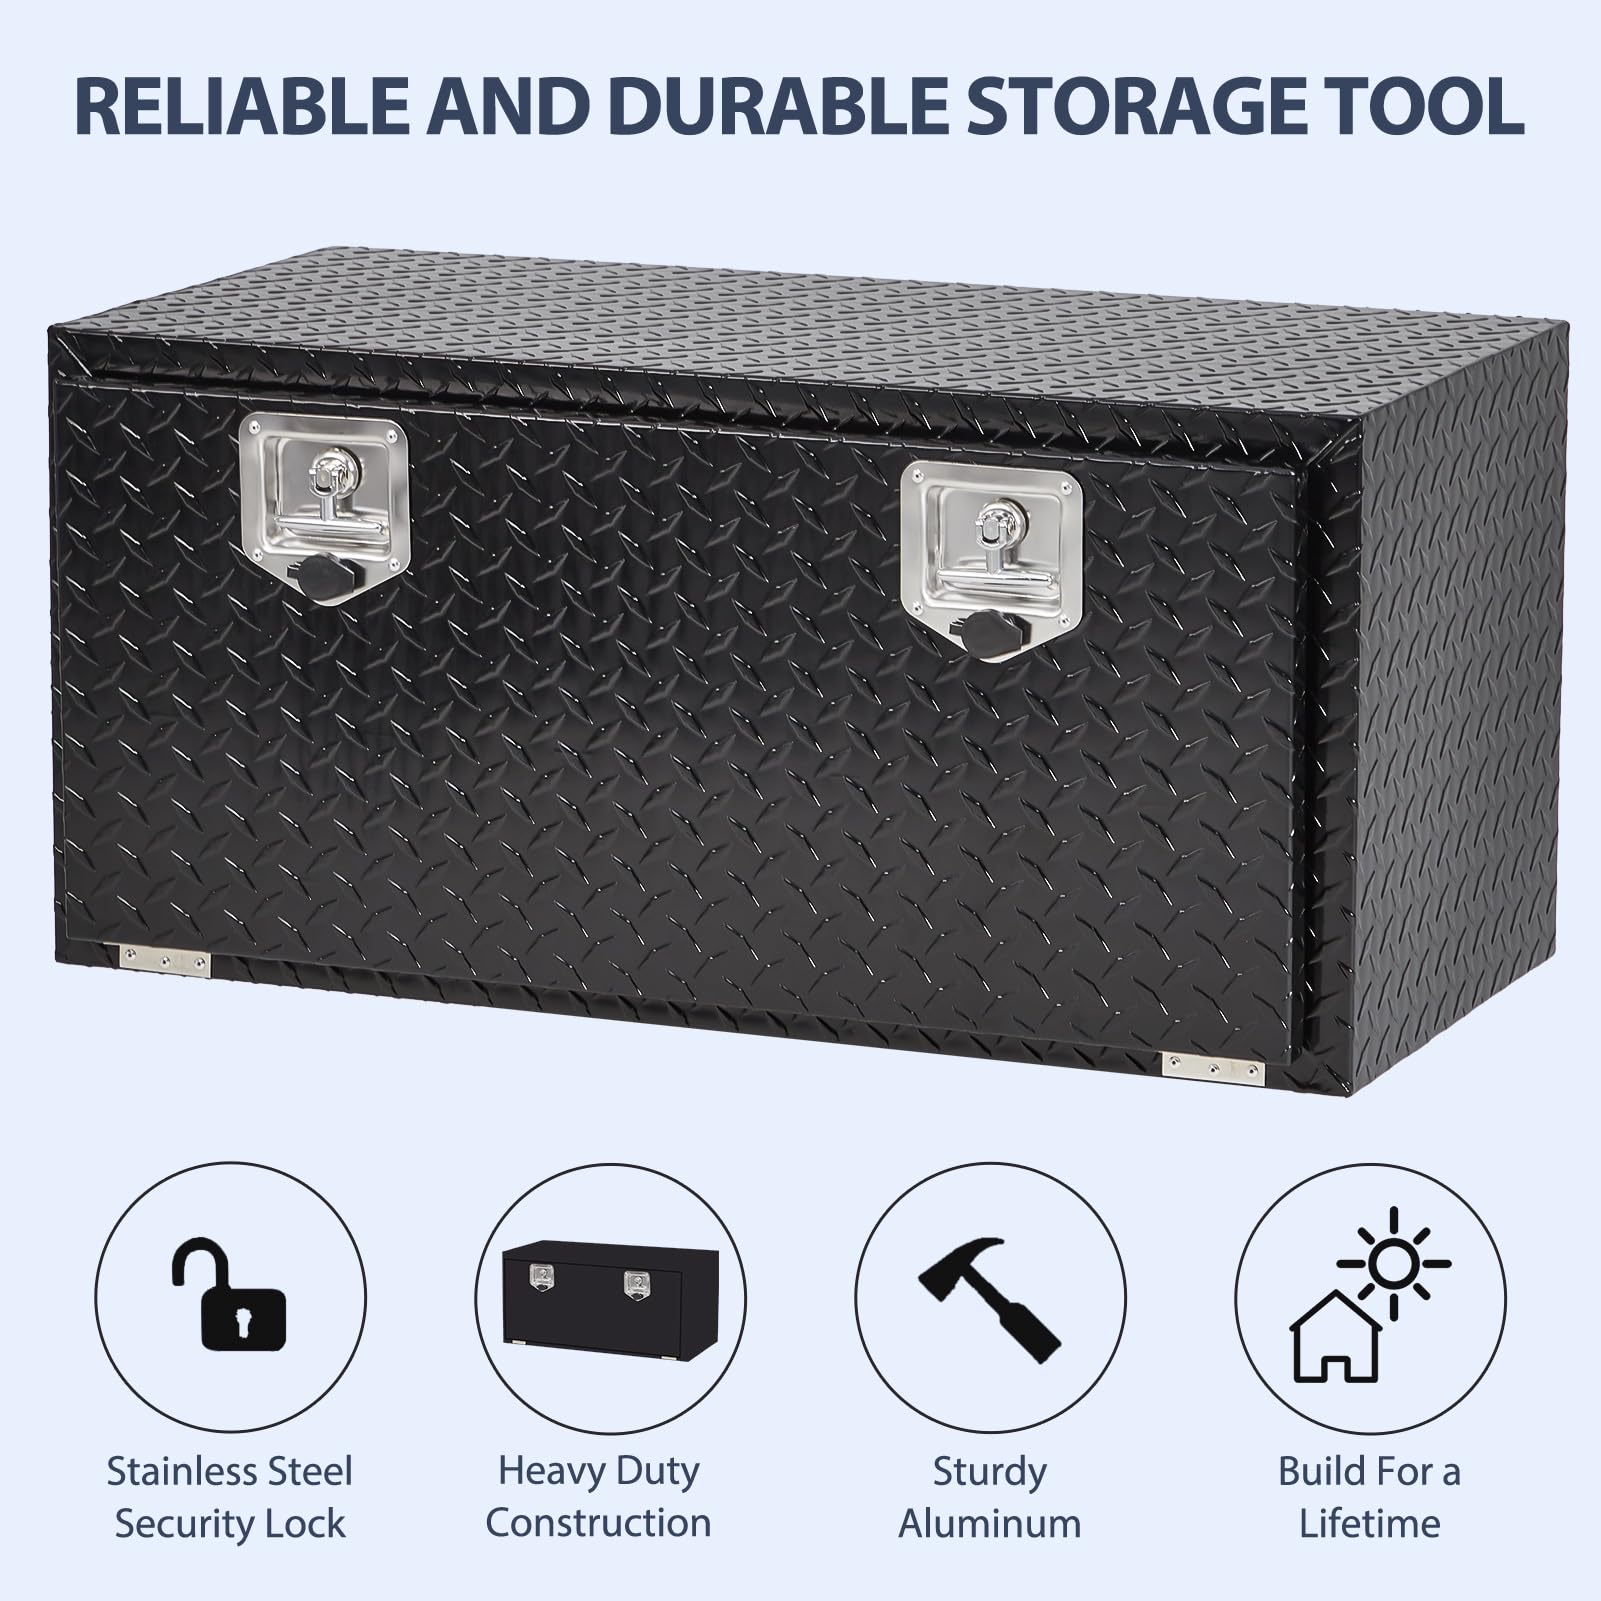 Heavy Duty Aluminum Underbody Truck Box, Waterproof Storage